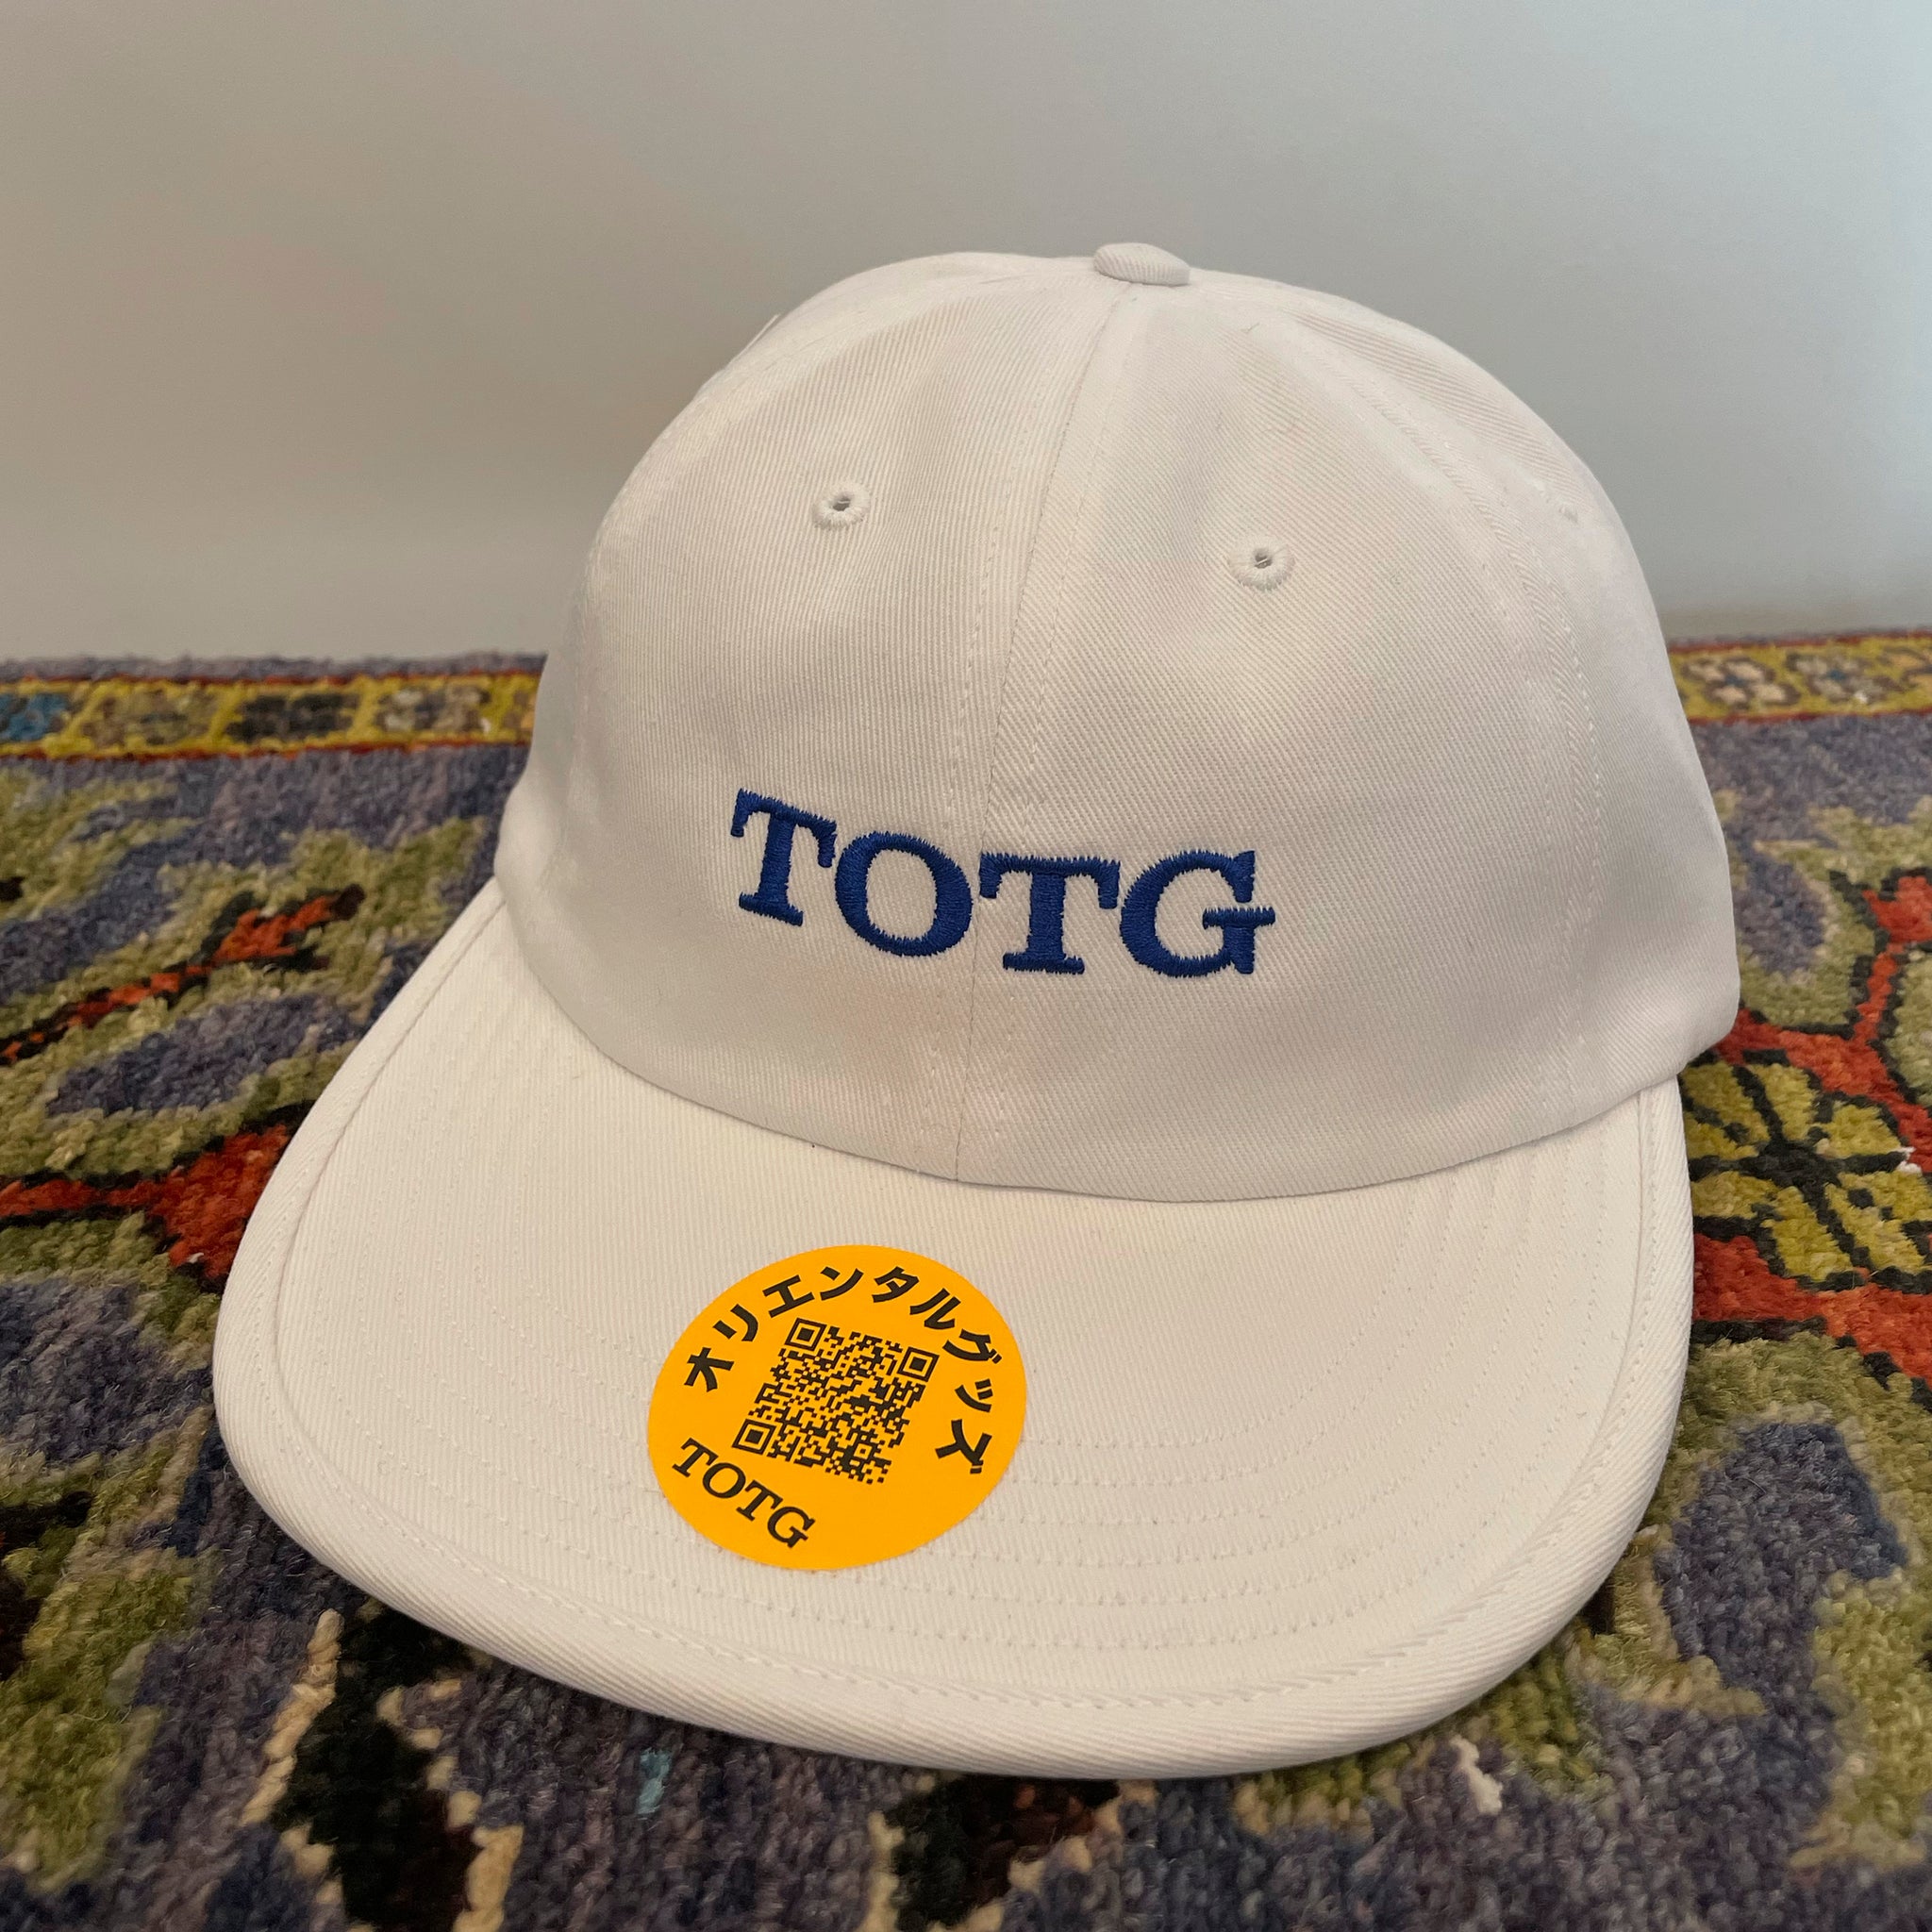 TOTG TOUR NOVELTY CAP